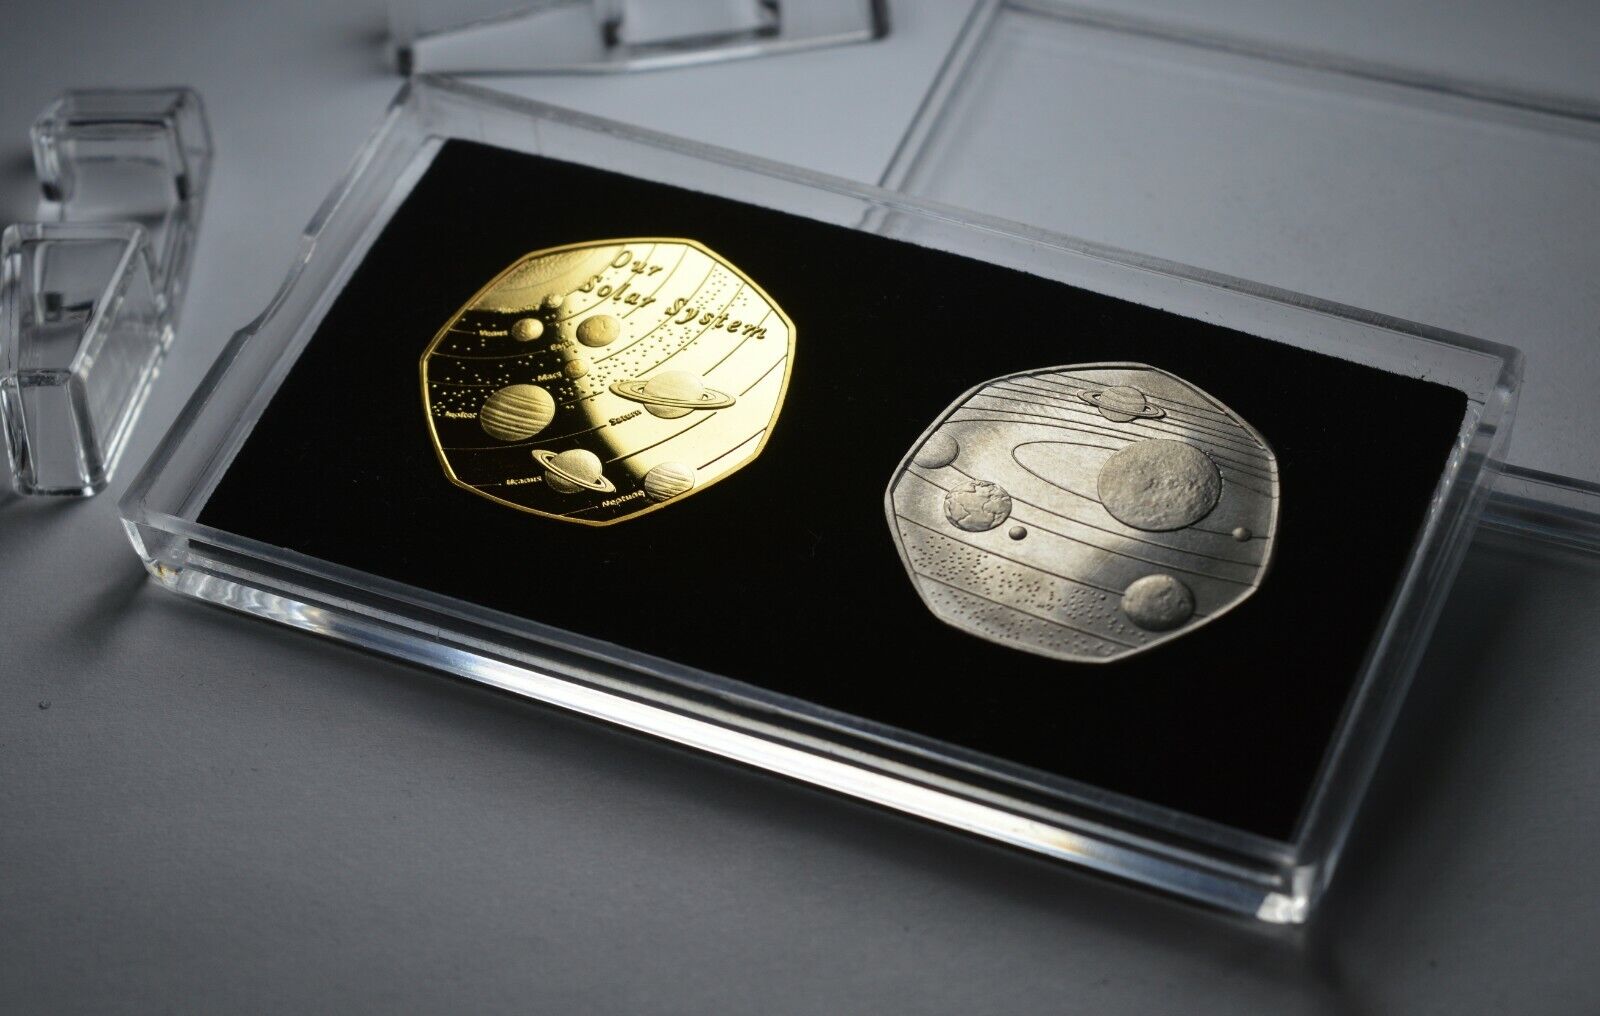 Pair of SOLAR SYSTEM Commemoratives in 50p Coin Display Case. Gold, Titanium 